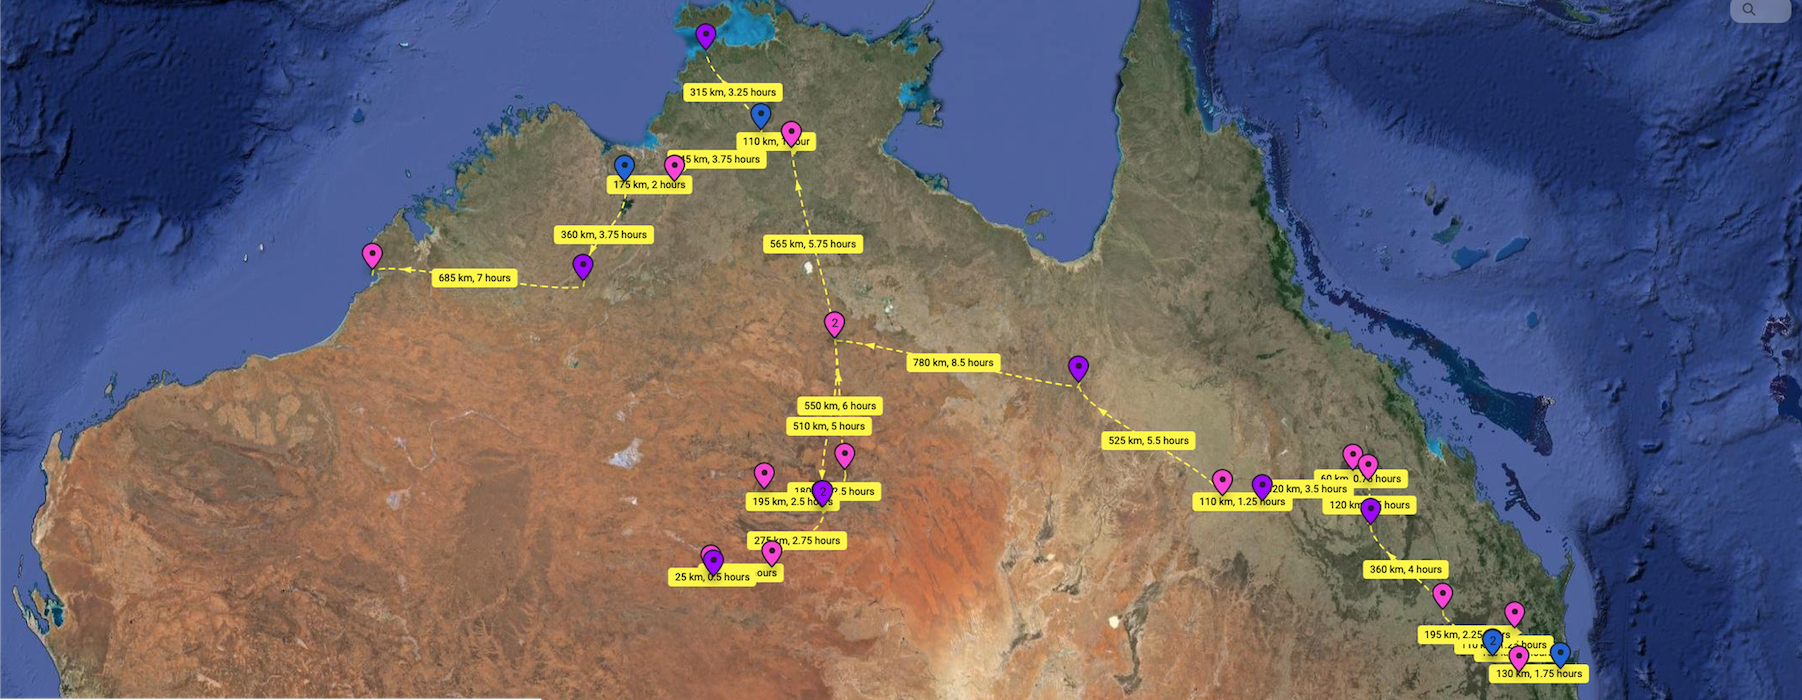 Media release: Quantum & dark matter scientists to visit outback Australia